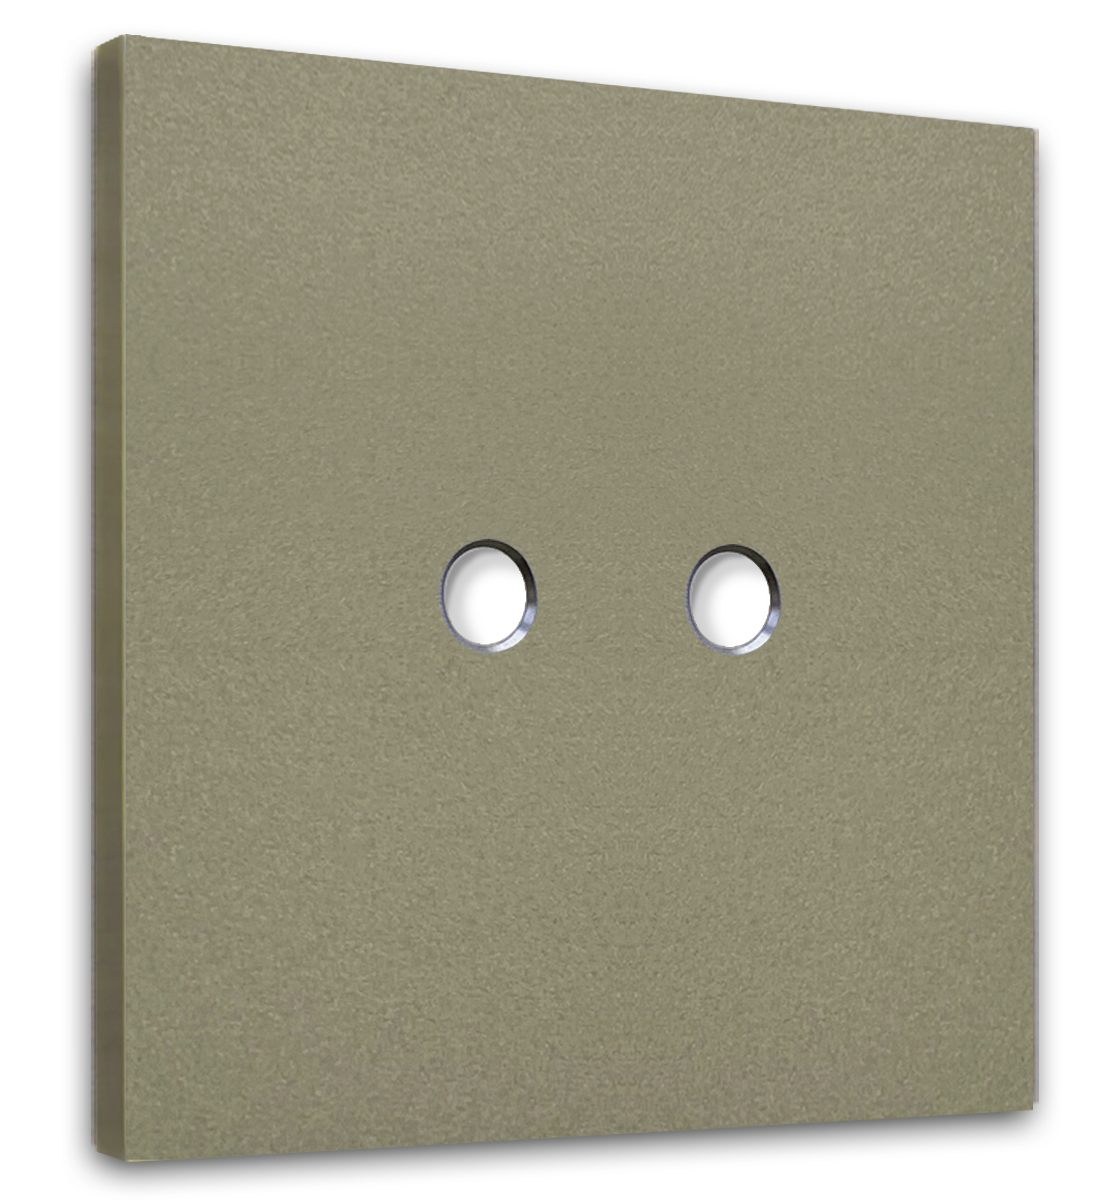 Retro-Kippschalter-Blende NINA 2-fach Bronze Metall. CJC Systems